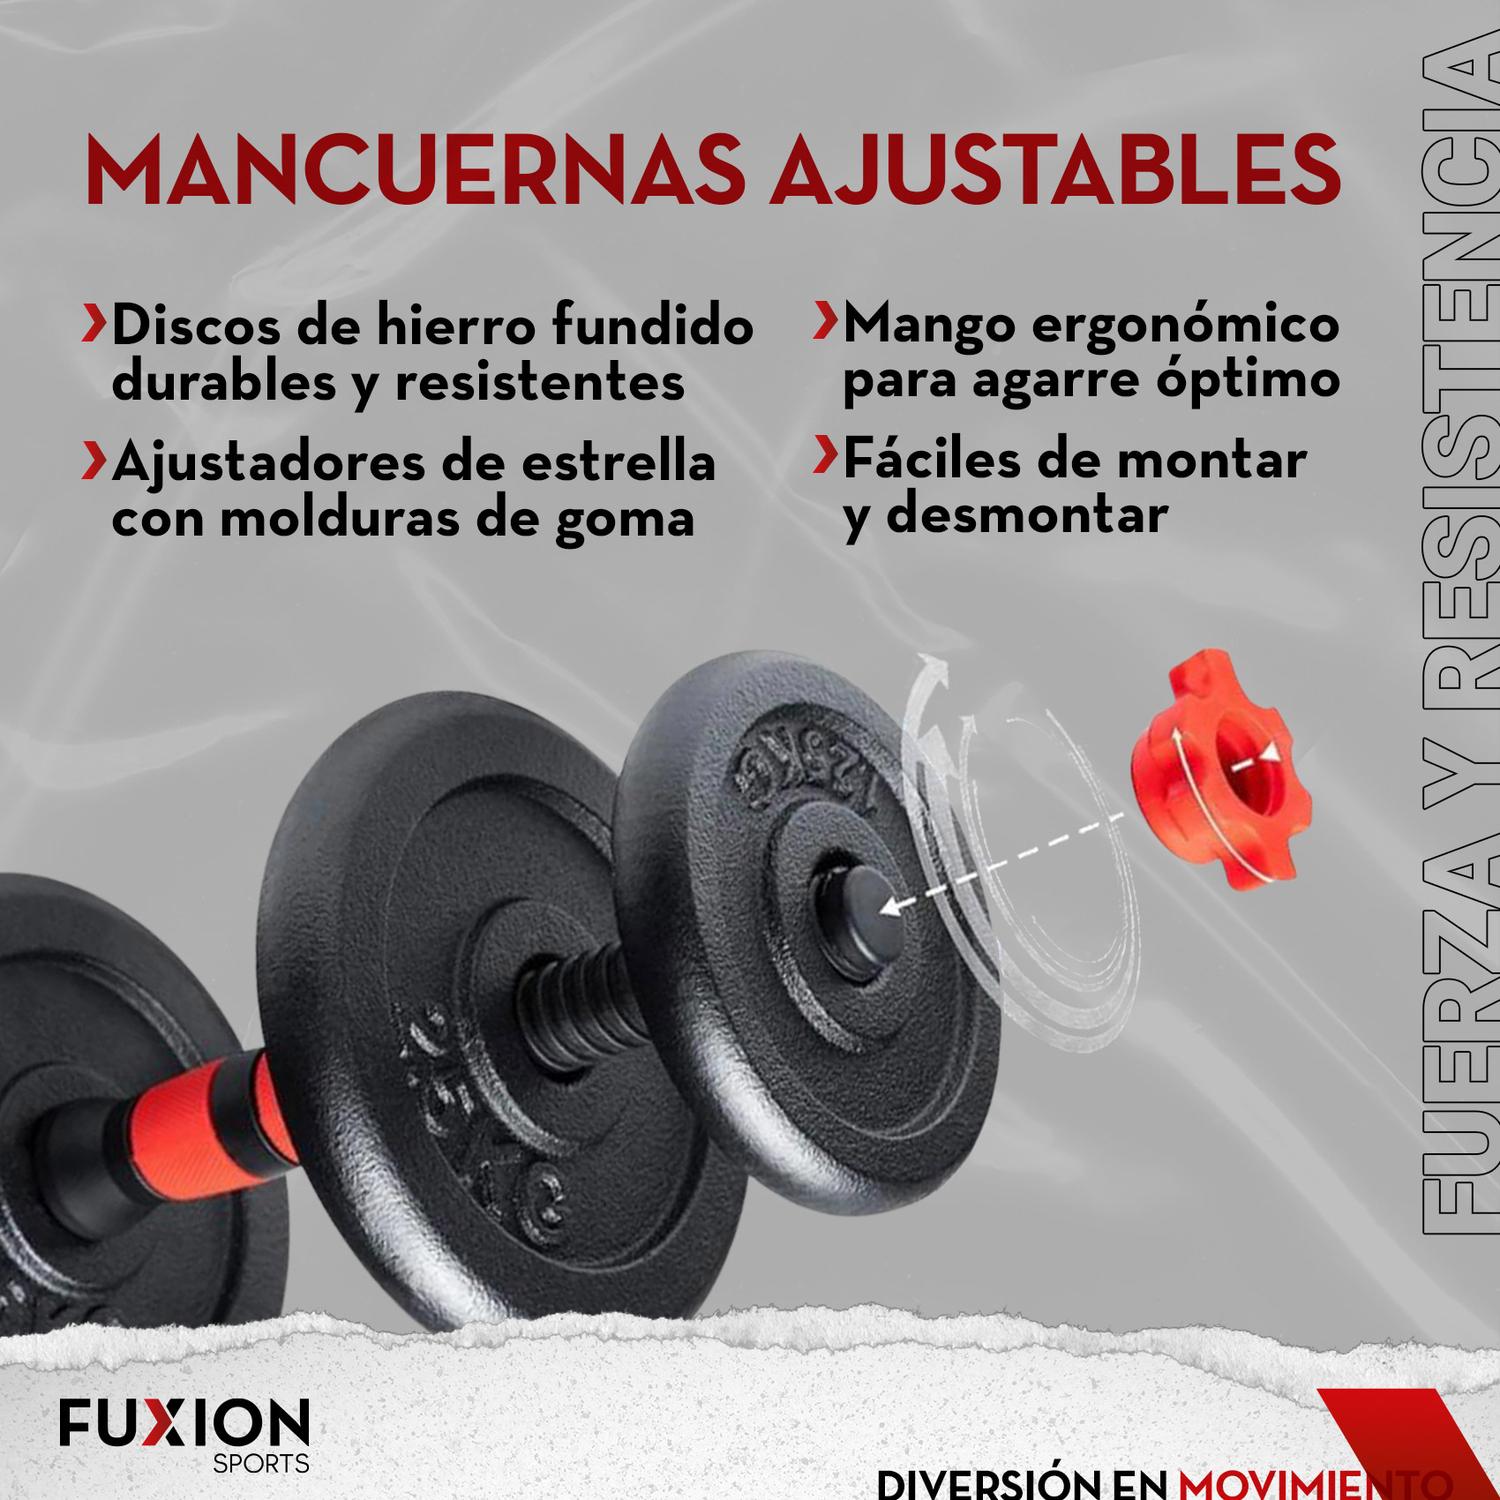 Set 2 Mancuernas Ajustables Fuxion Sports, 20 kg.